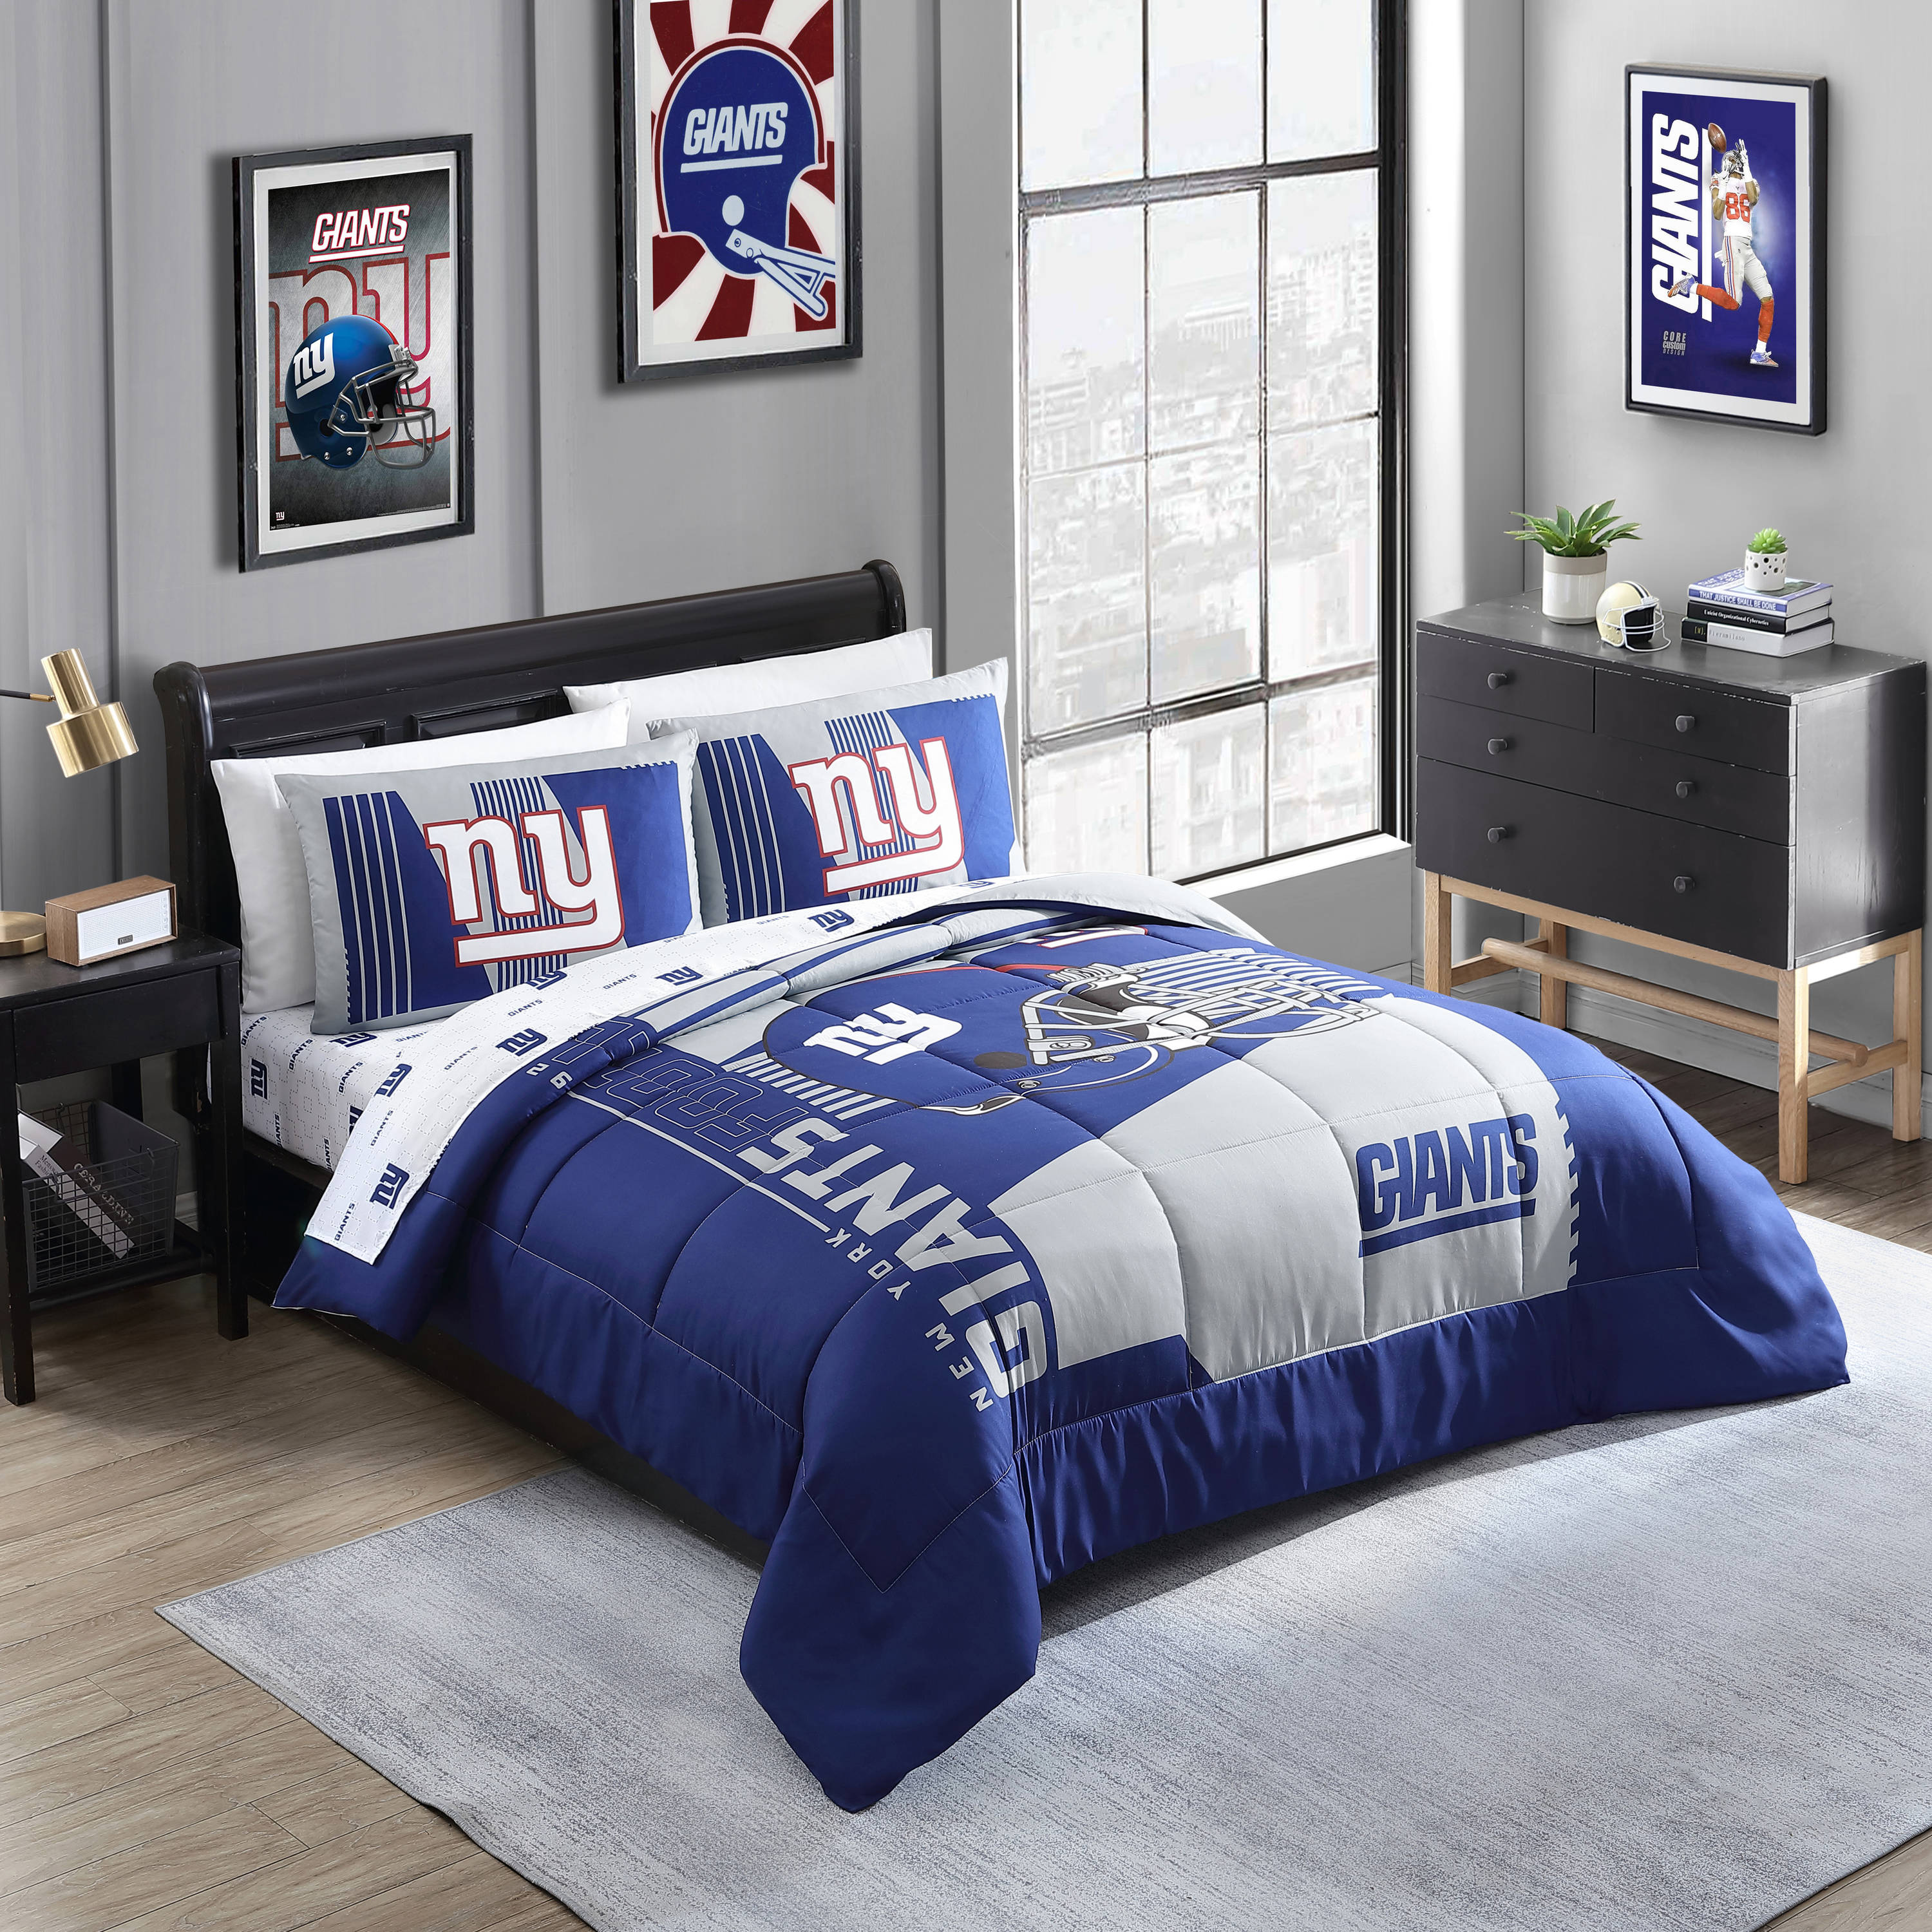 Dorm Decor NFL Las Vegas Raiders tapestry For Living Room Bedroom 